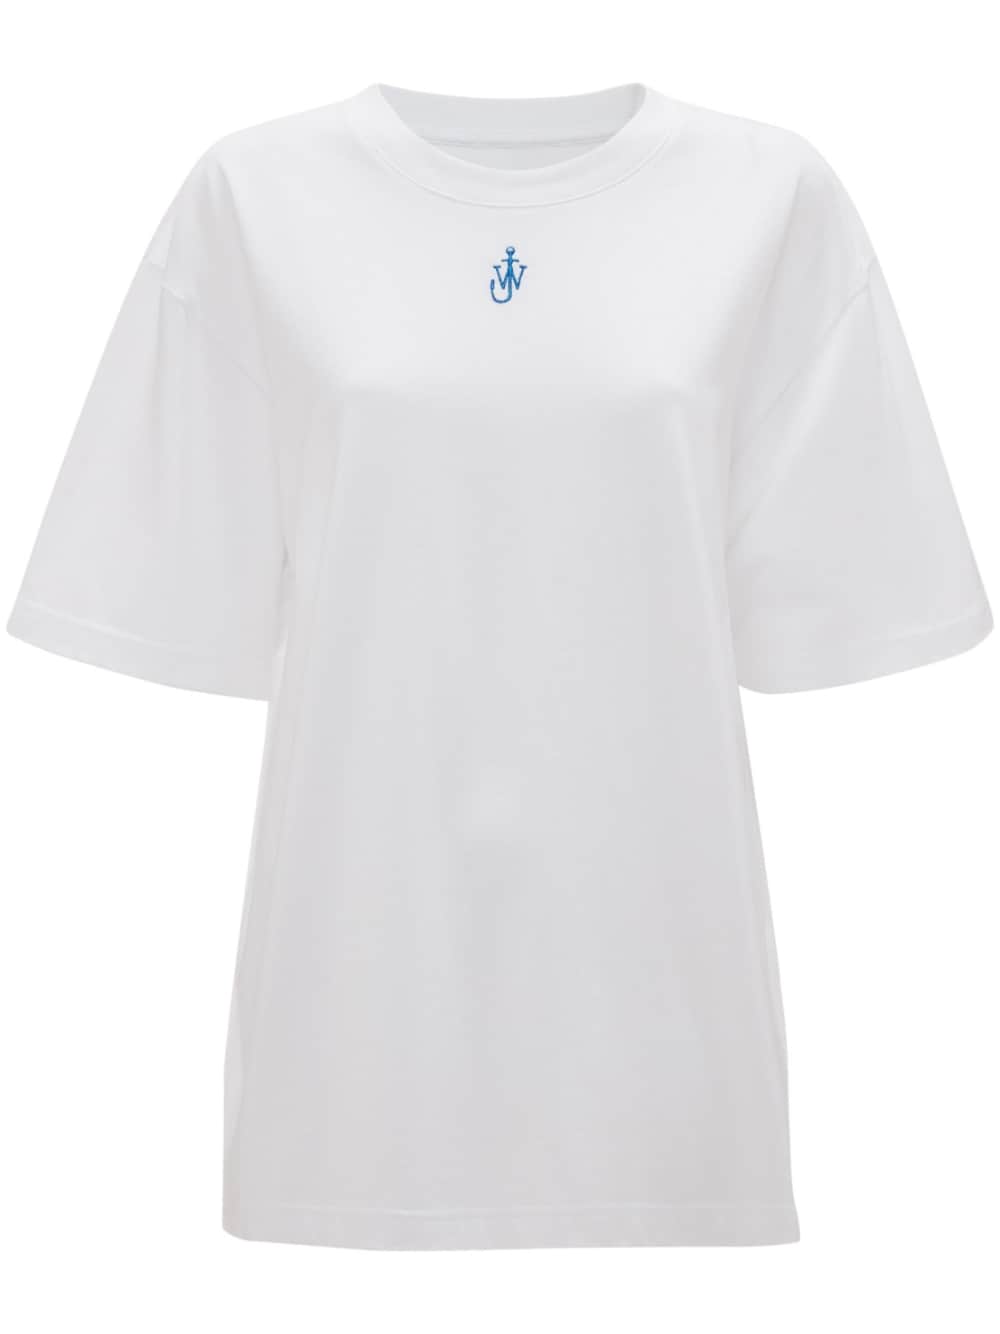 JW Anderson fin-print T-shirt - White